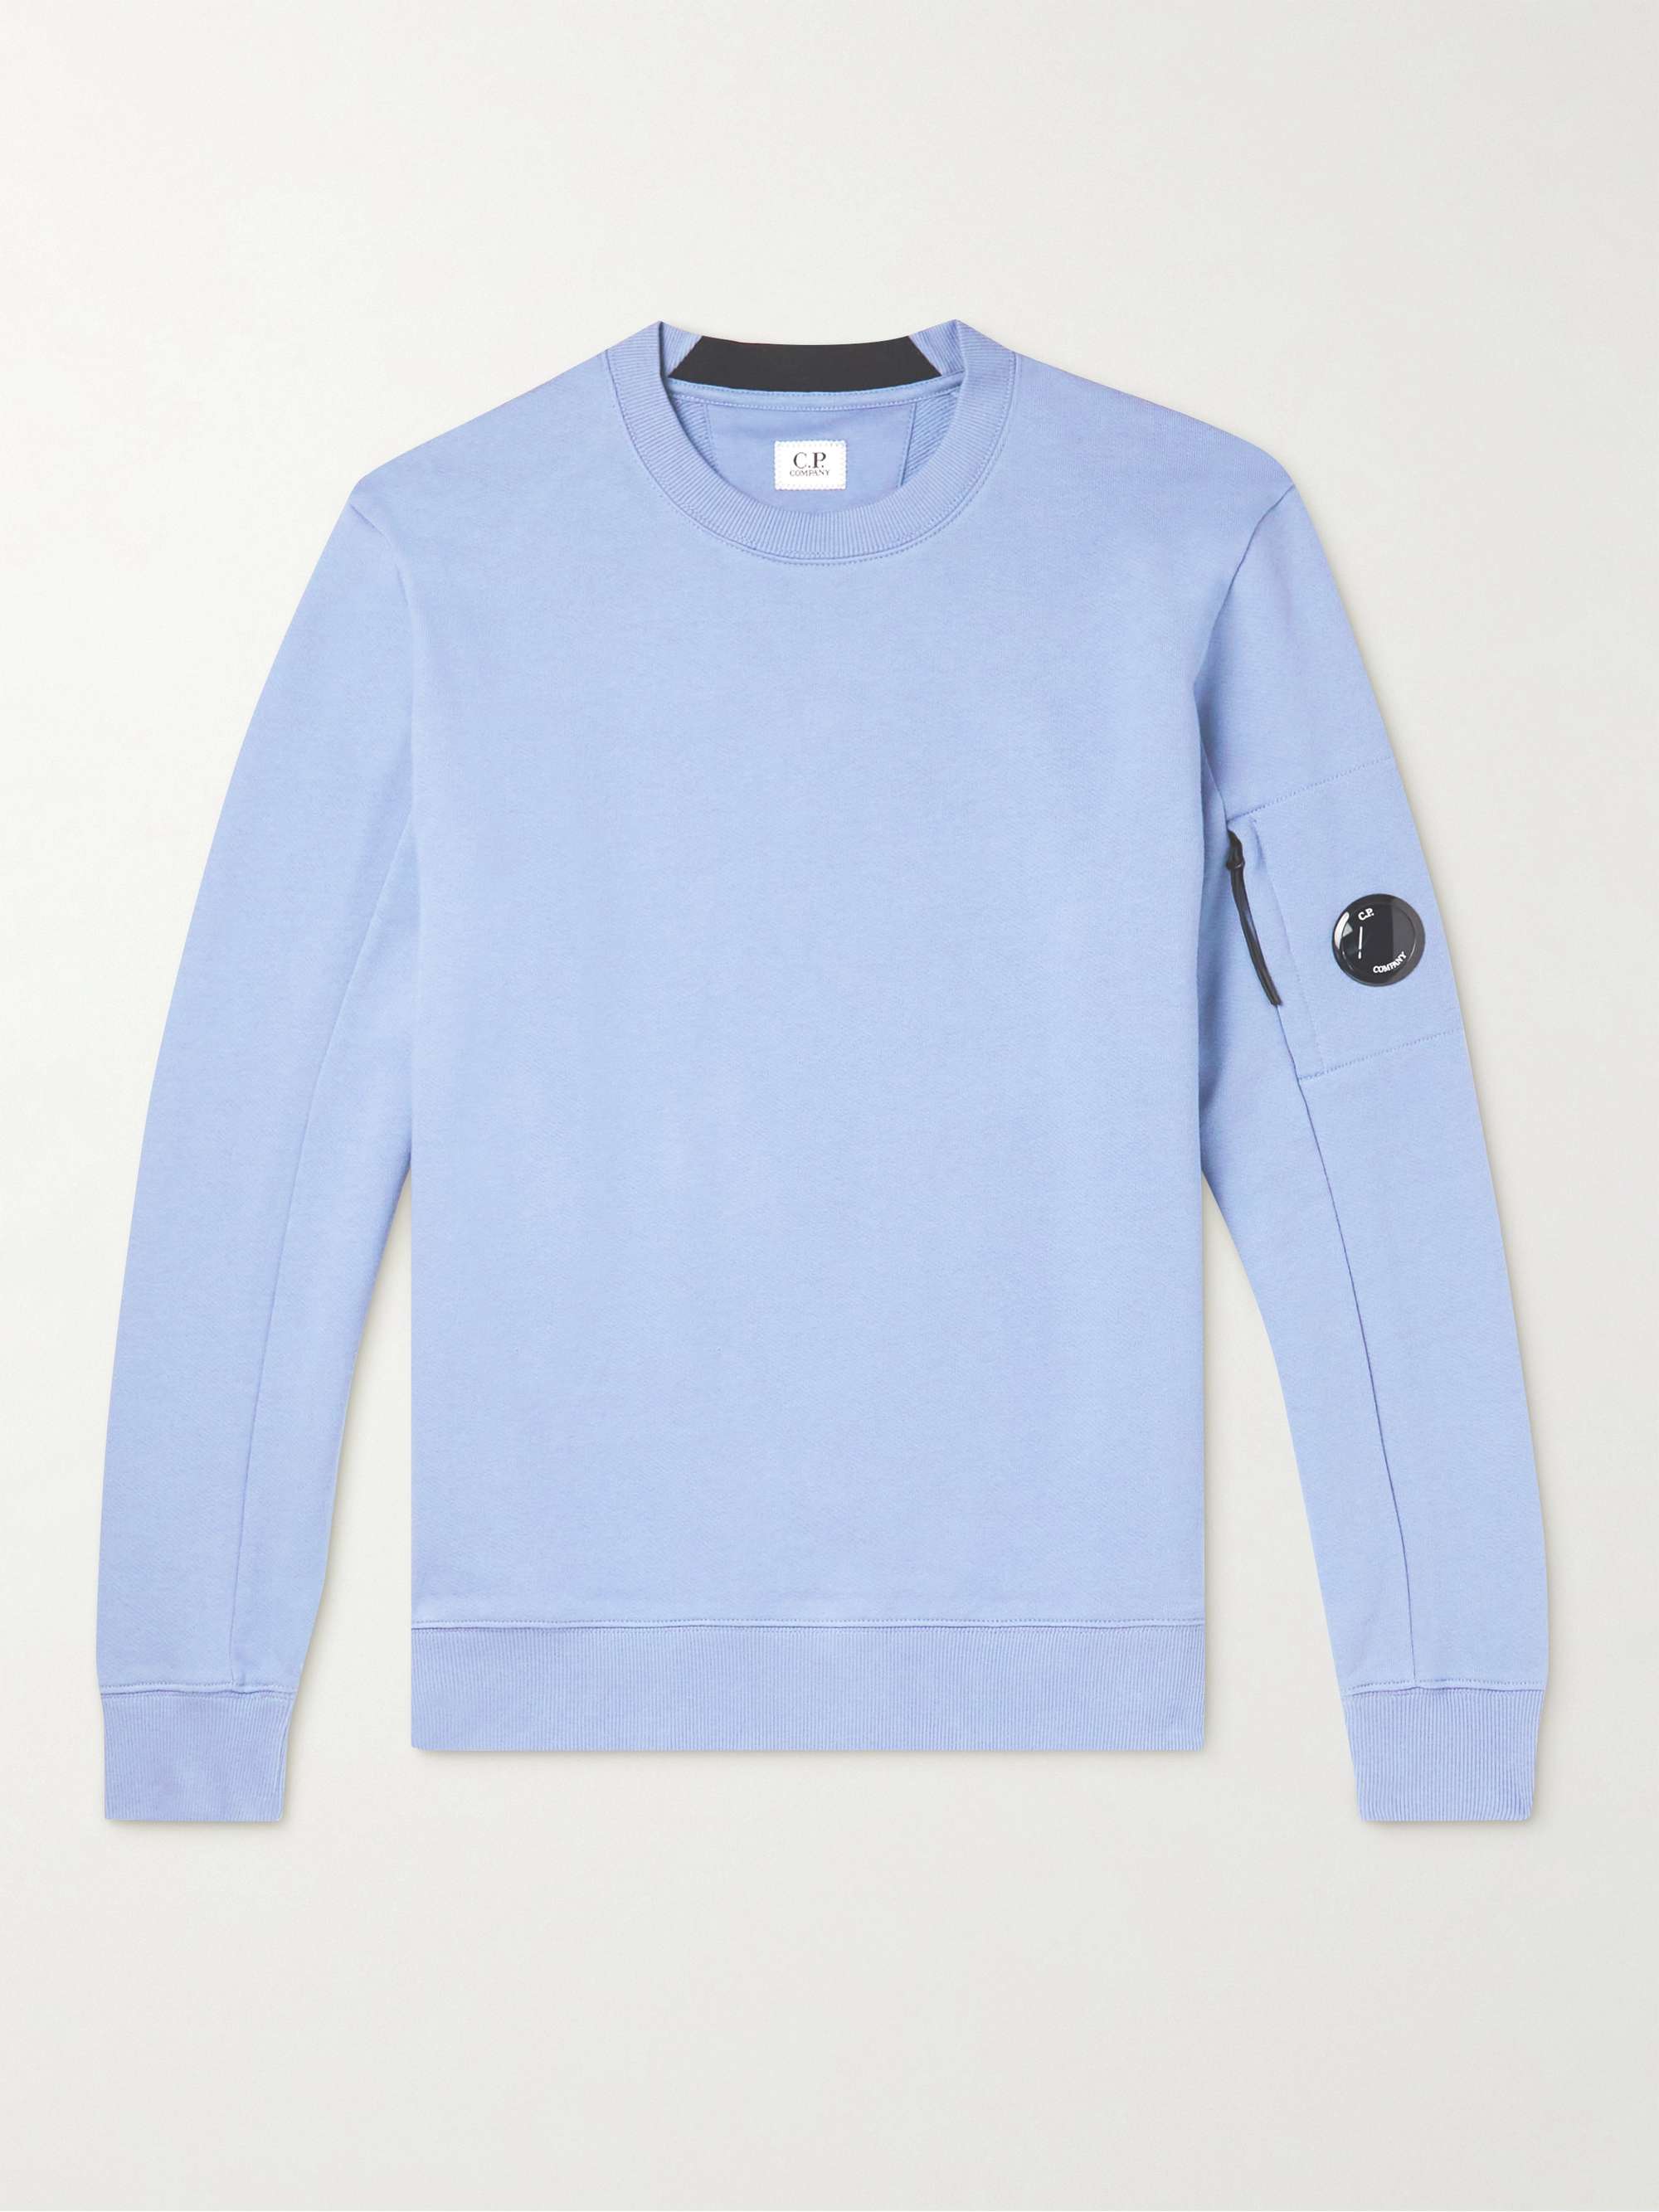 C.P. COMPANY Cotton-Jersey Sweatshirt for Men | MR PORTER